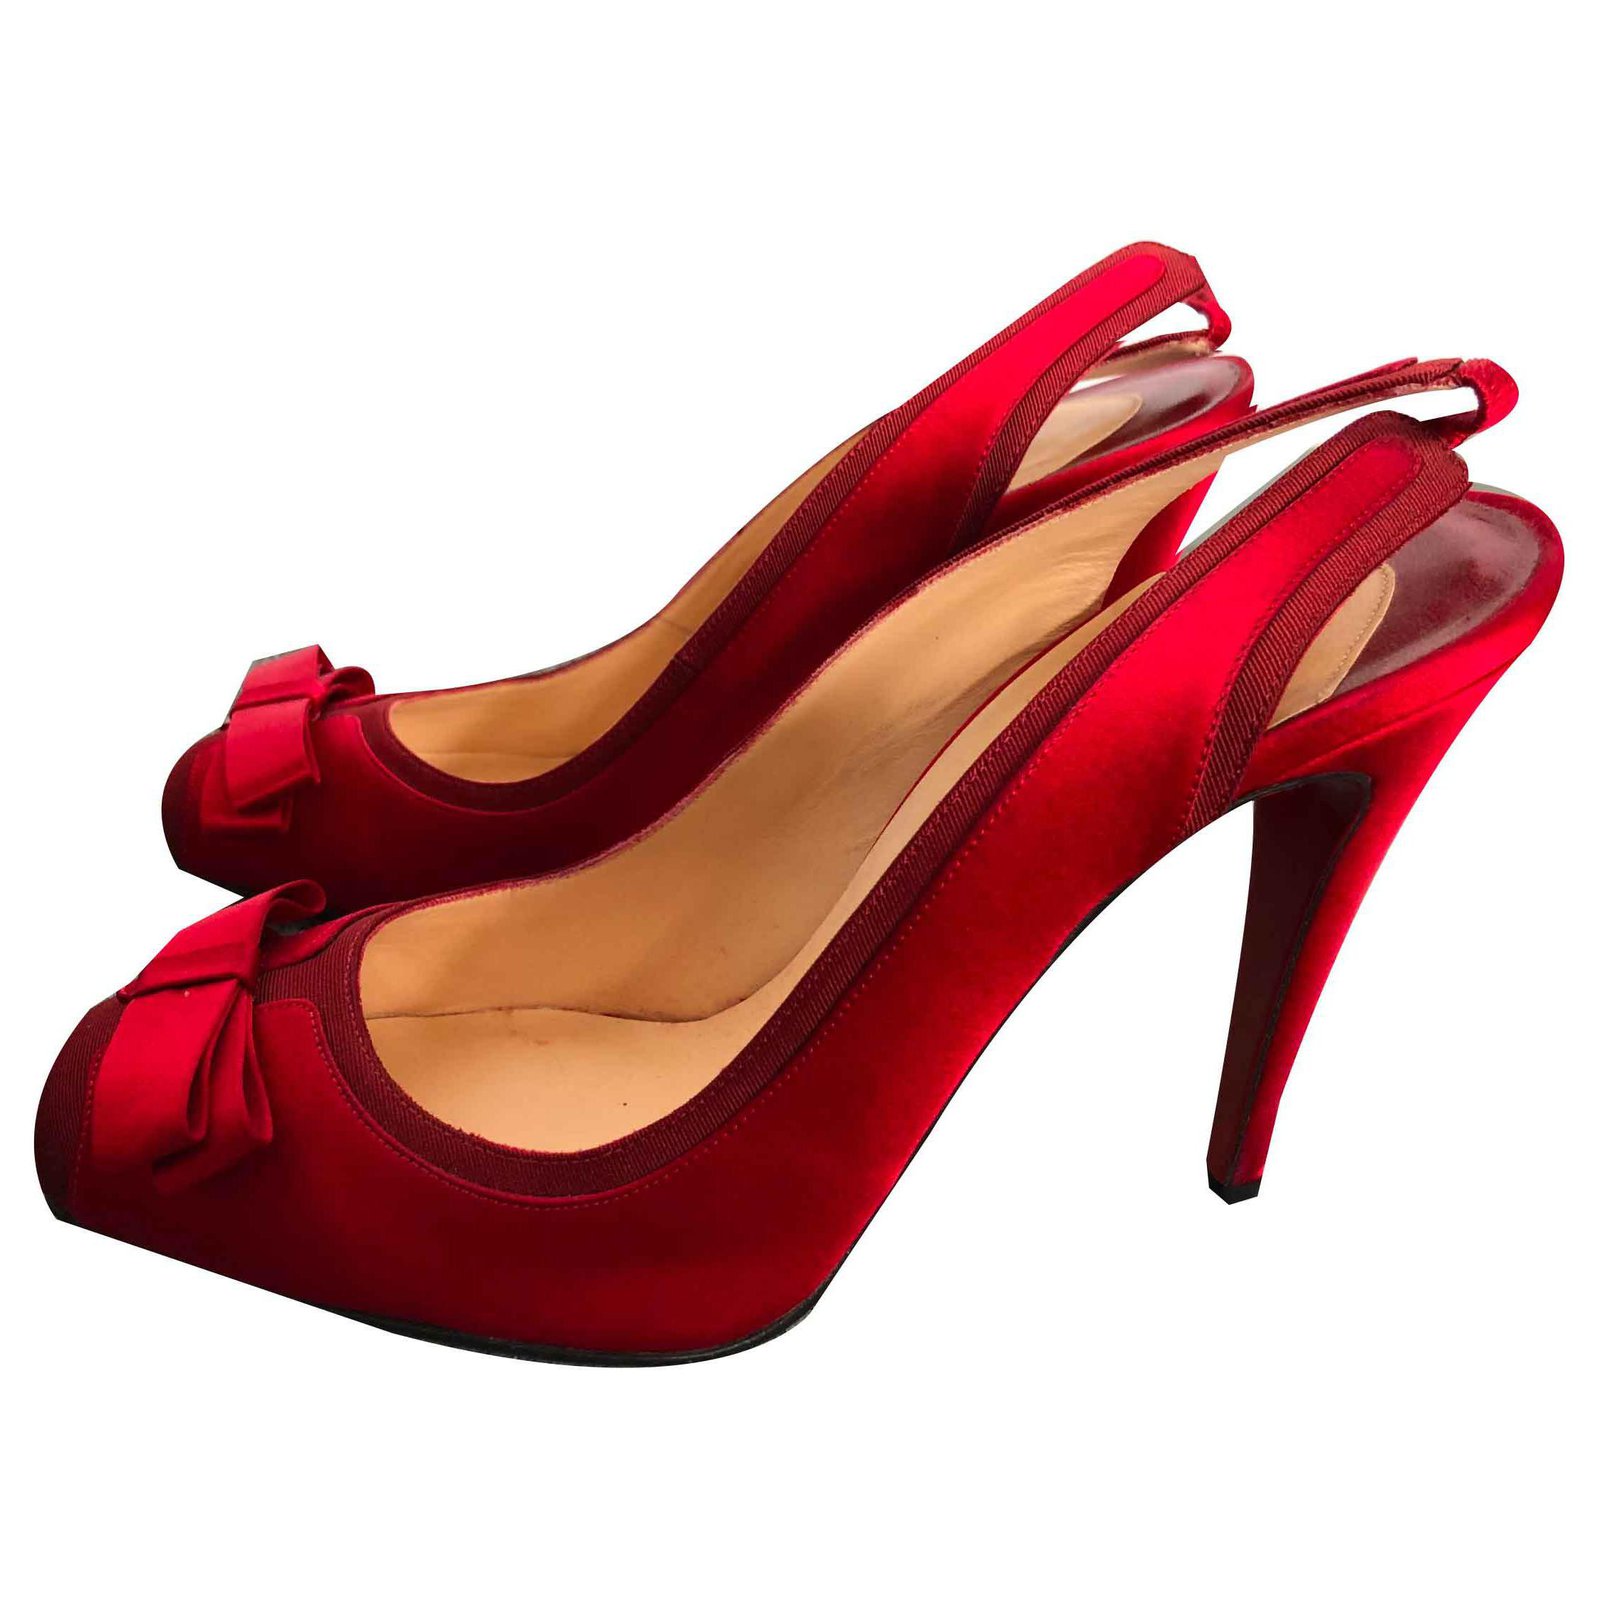 christian louboutin red heels